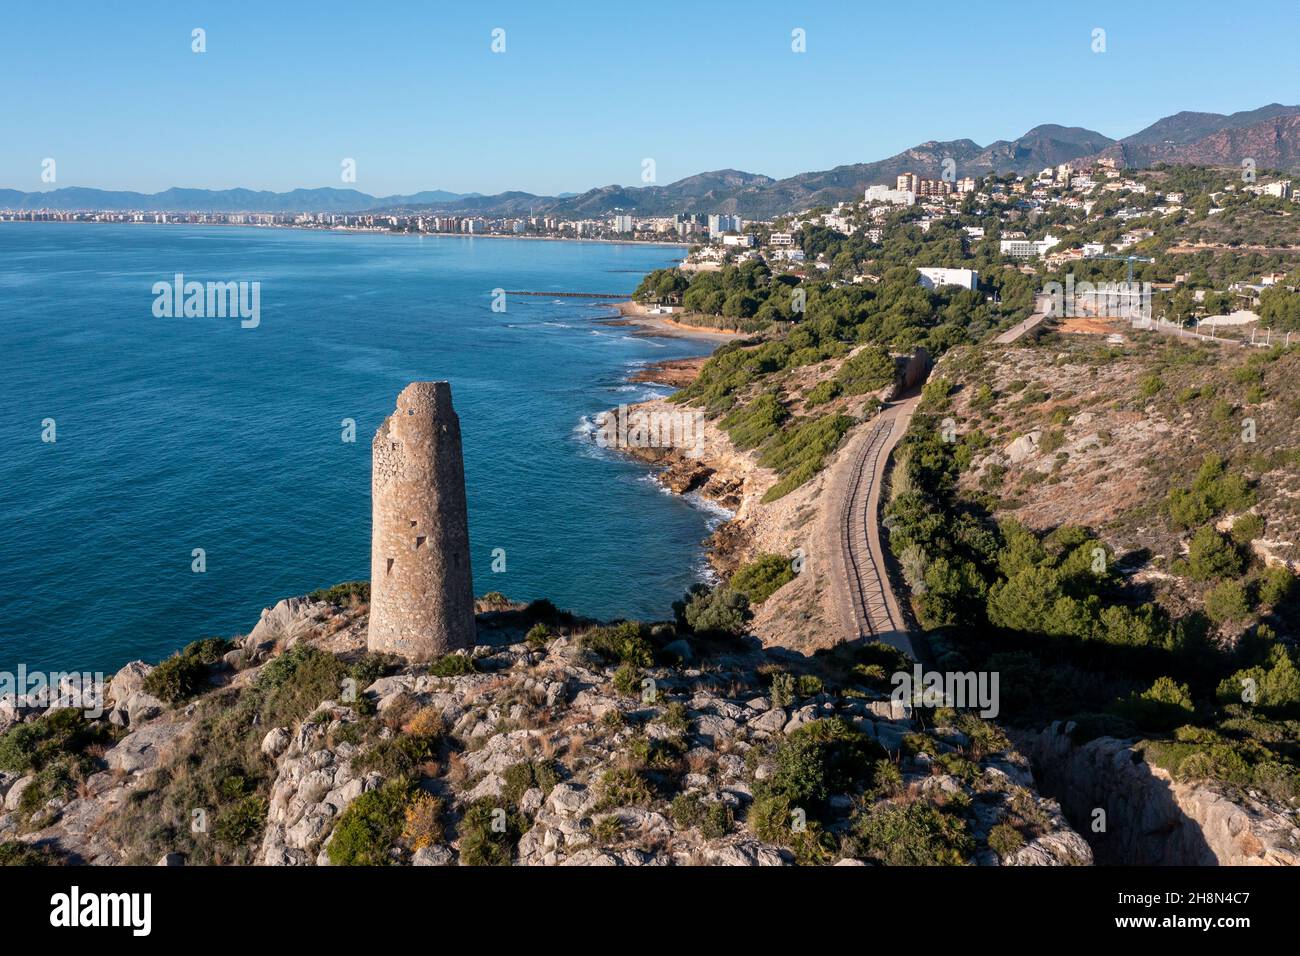 https://c8.alamy.com/comp/2H8N4C7/torre-colomera-oropesa-del-mar-castelln-spain-2H8N4C7.jpg